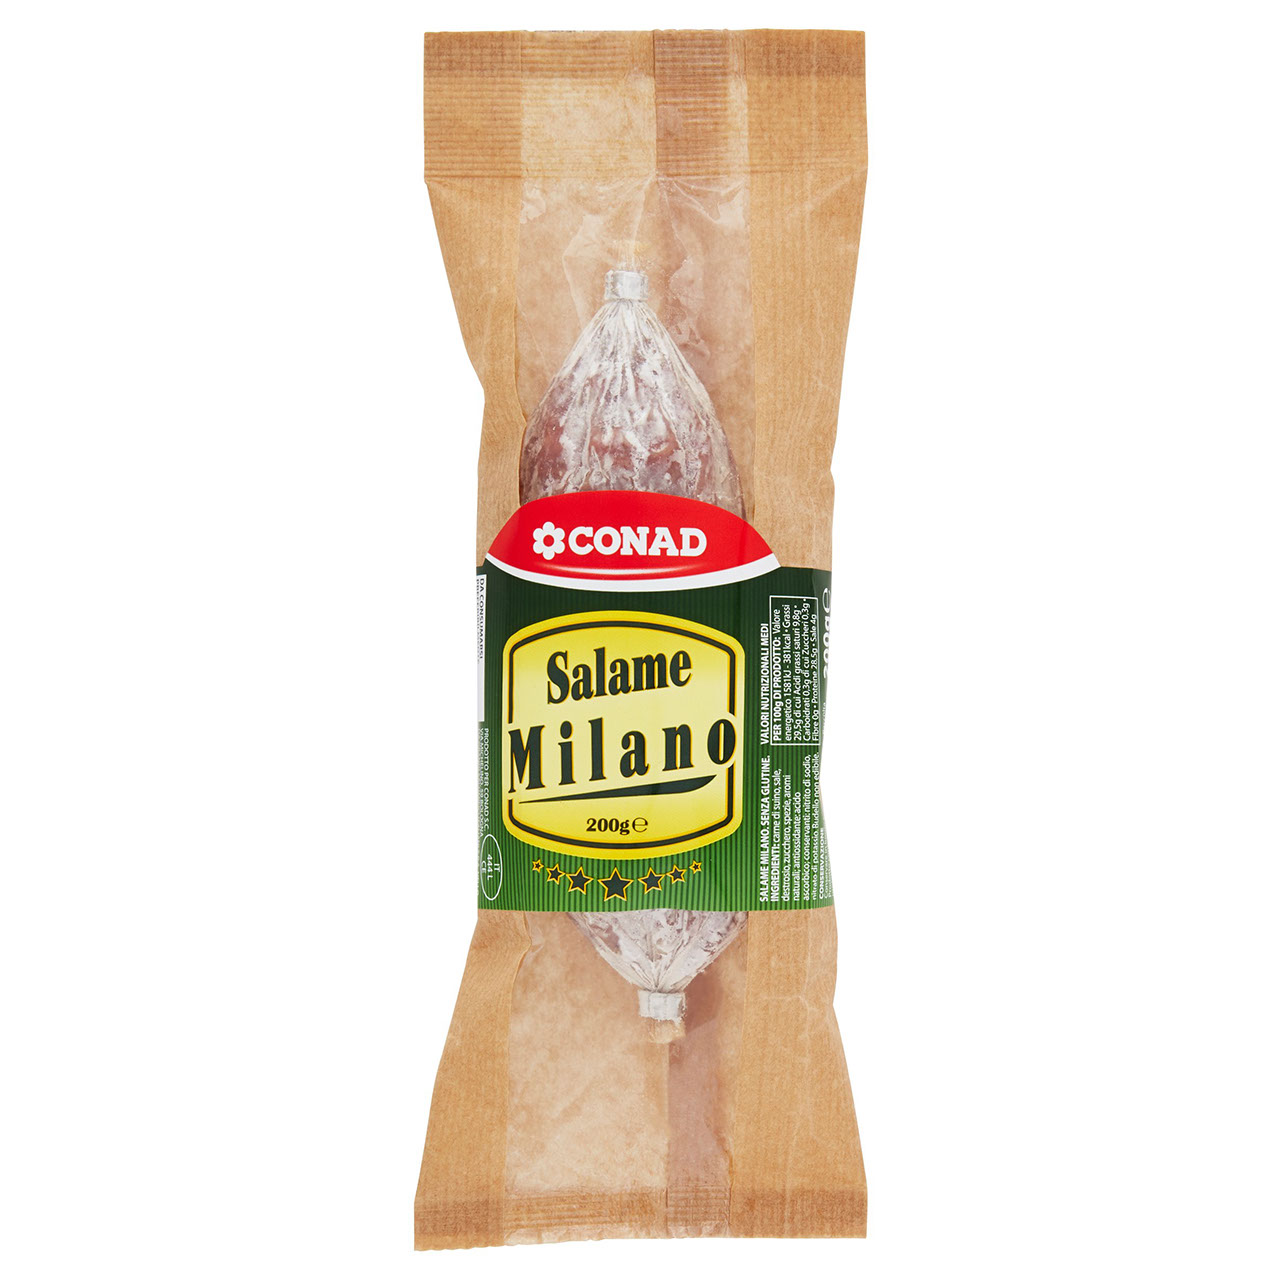 Salame Milano 200 g Conad in vendita online